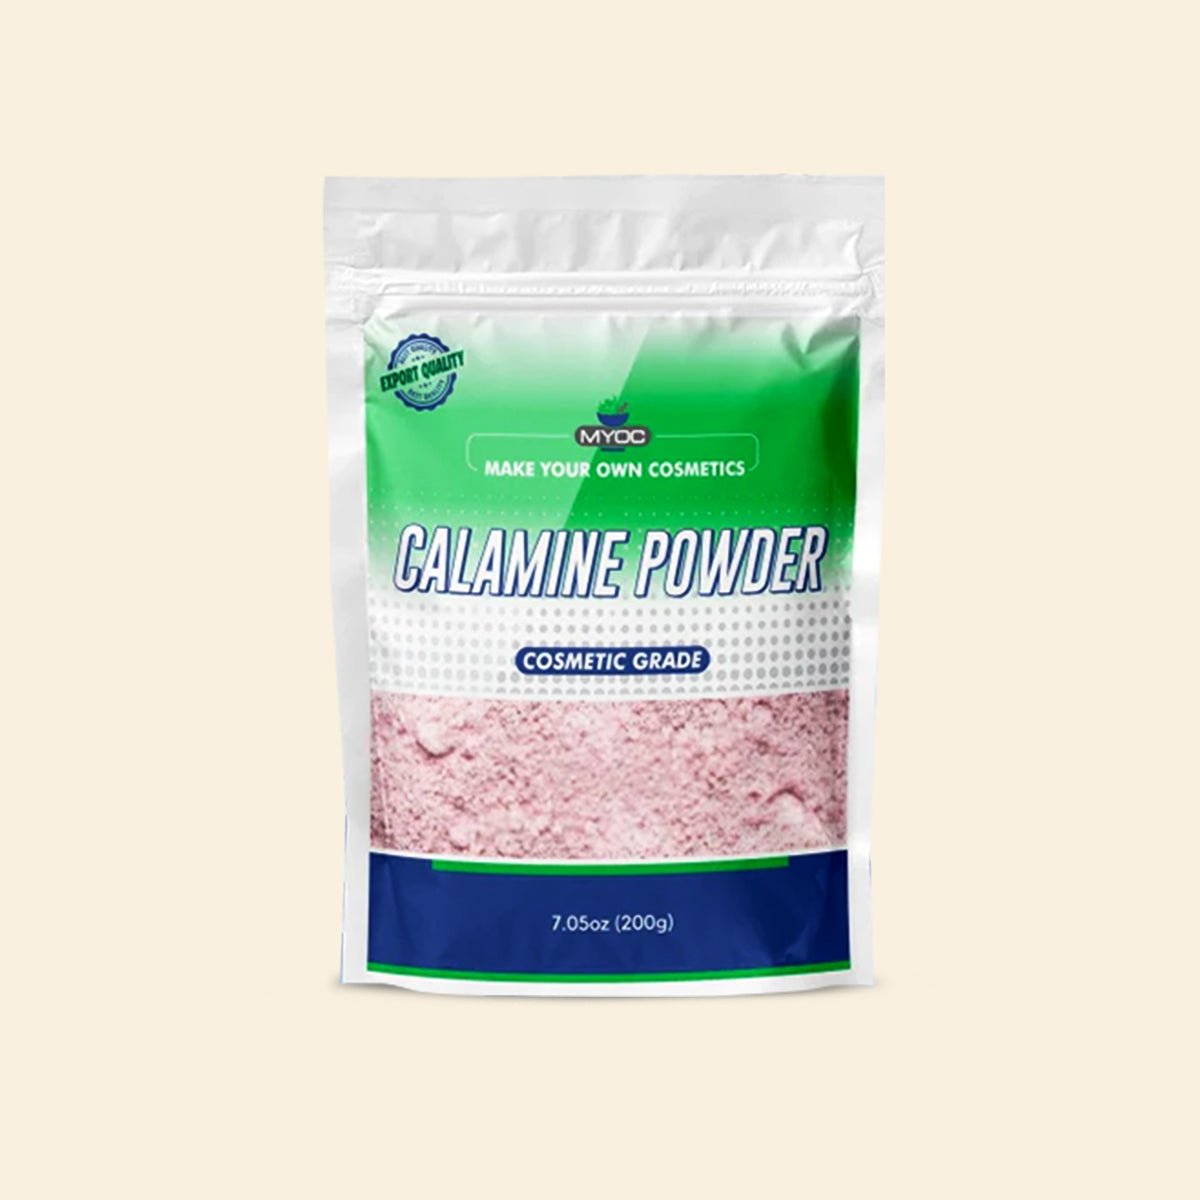 MYOC Calamine Powder for USA